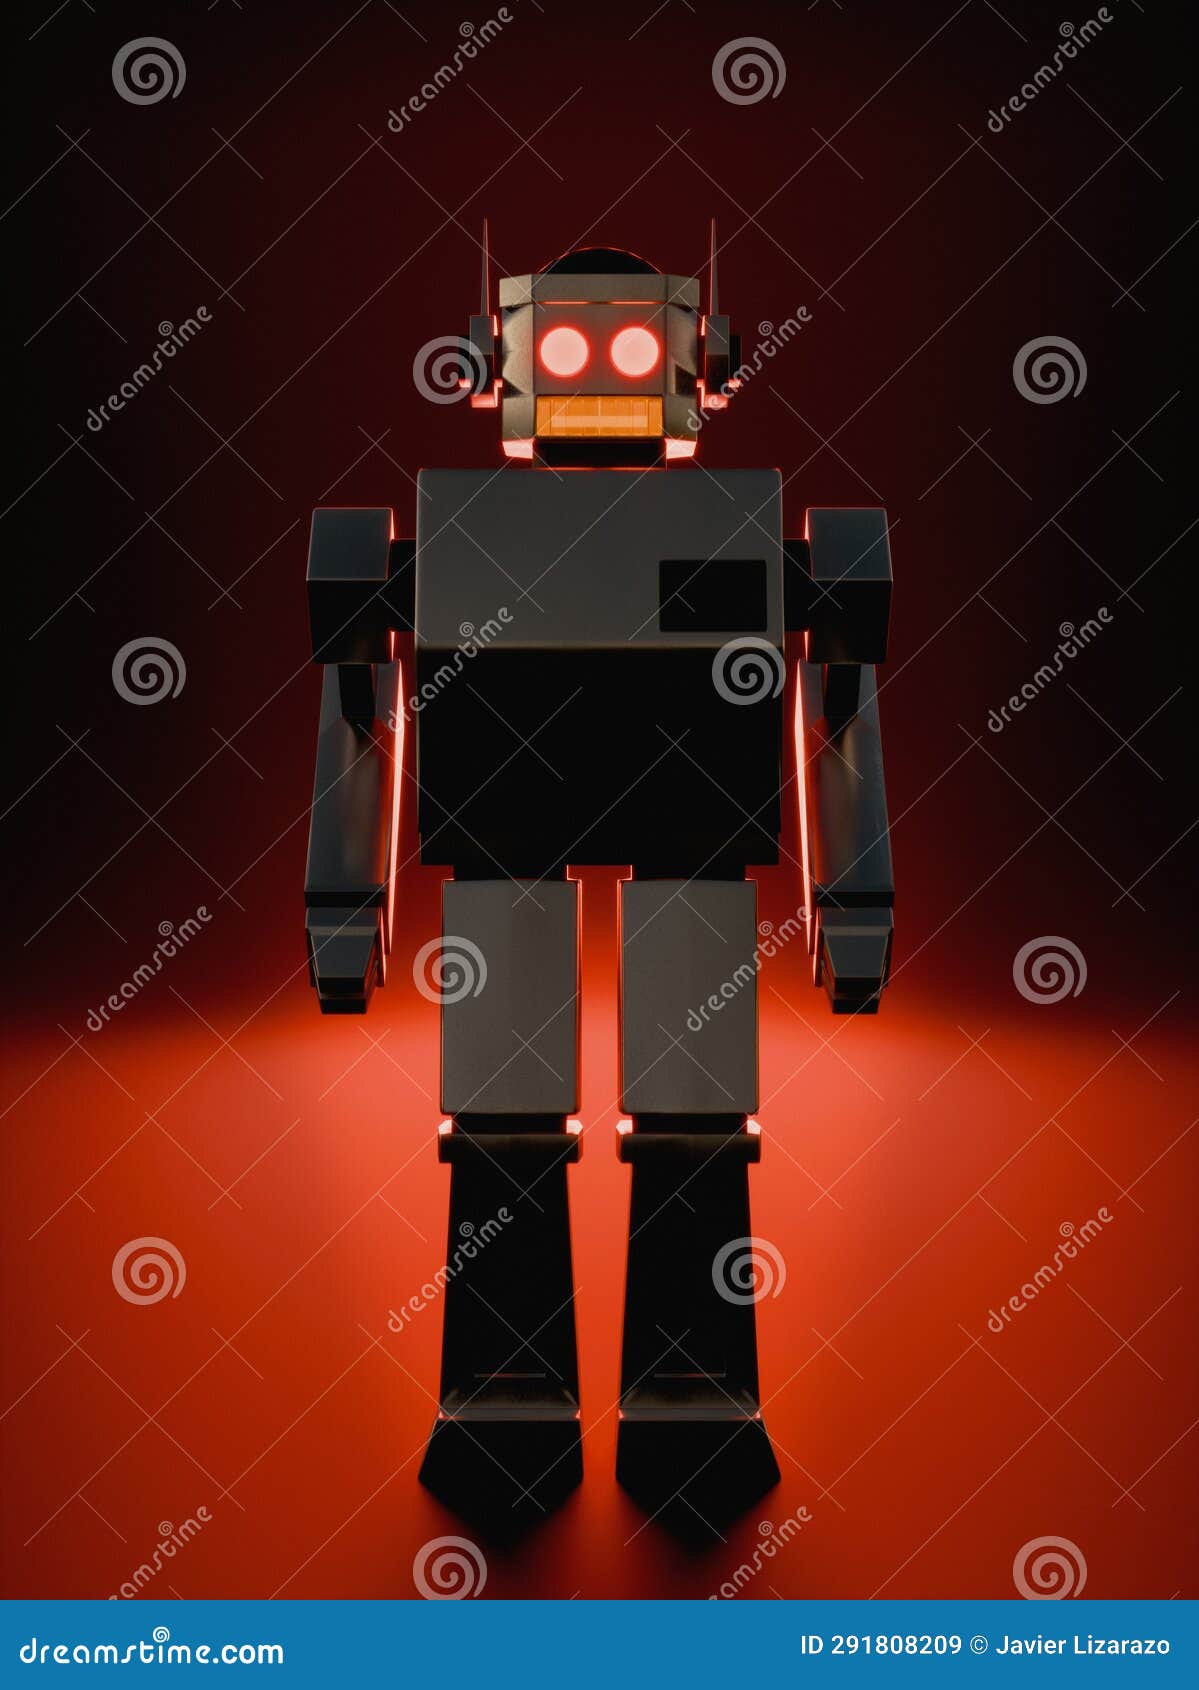 evil metallic robot on red background, artificial intelligence retro 60s - robot metÃÂ¡lico malvado en fondo rojo, inteligencia